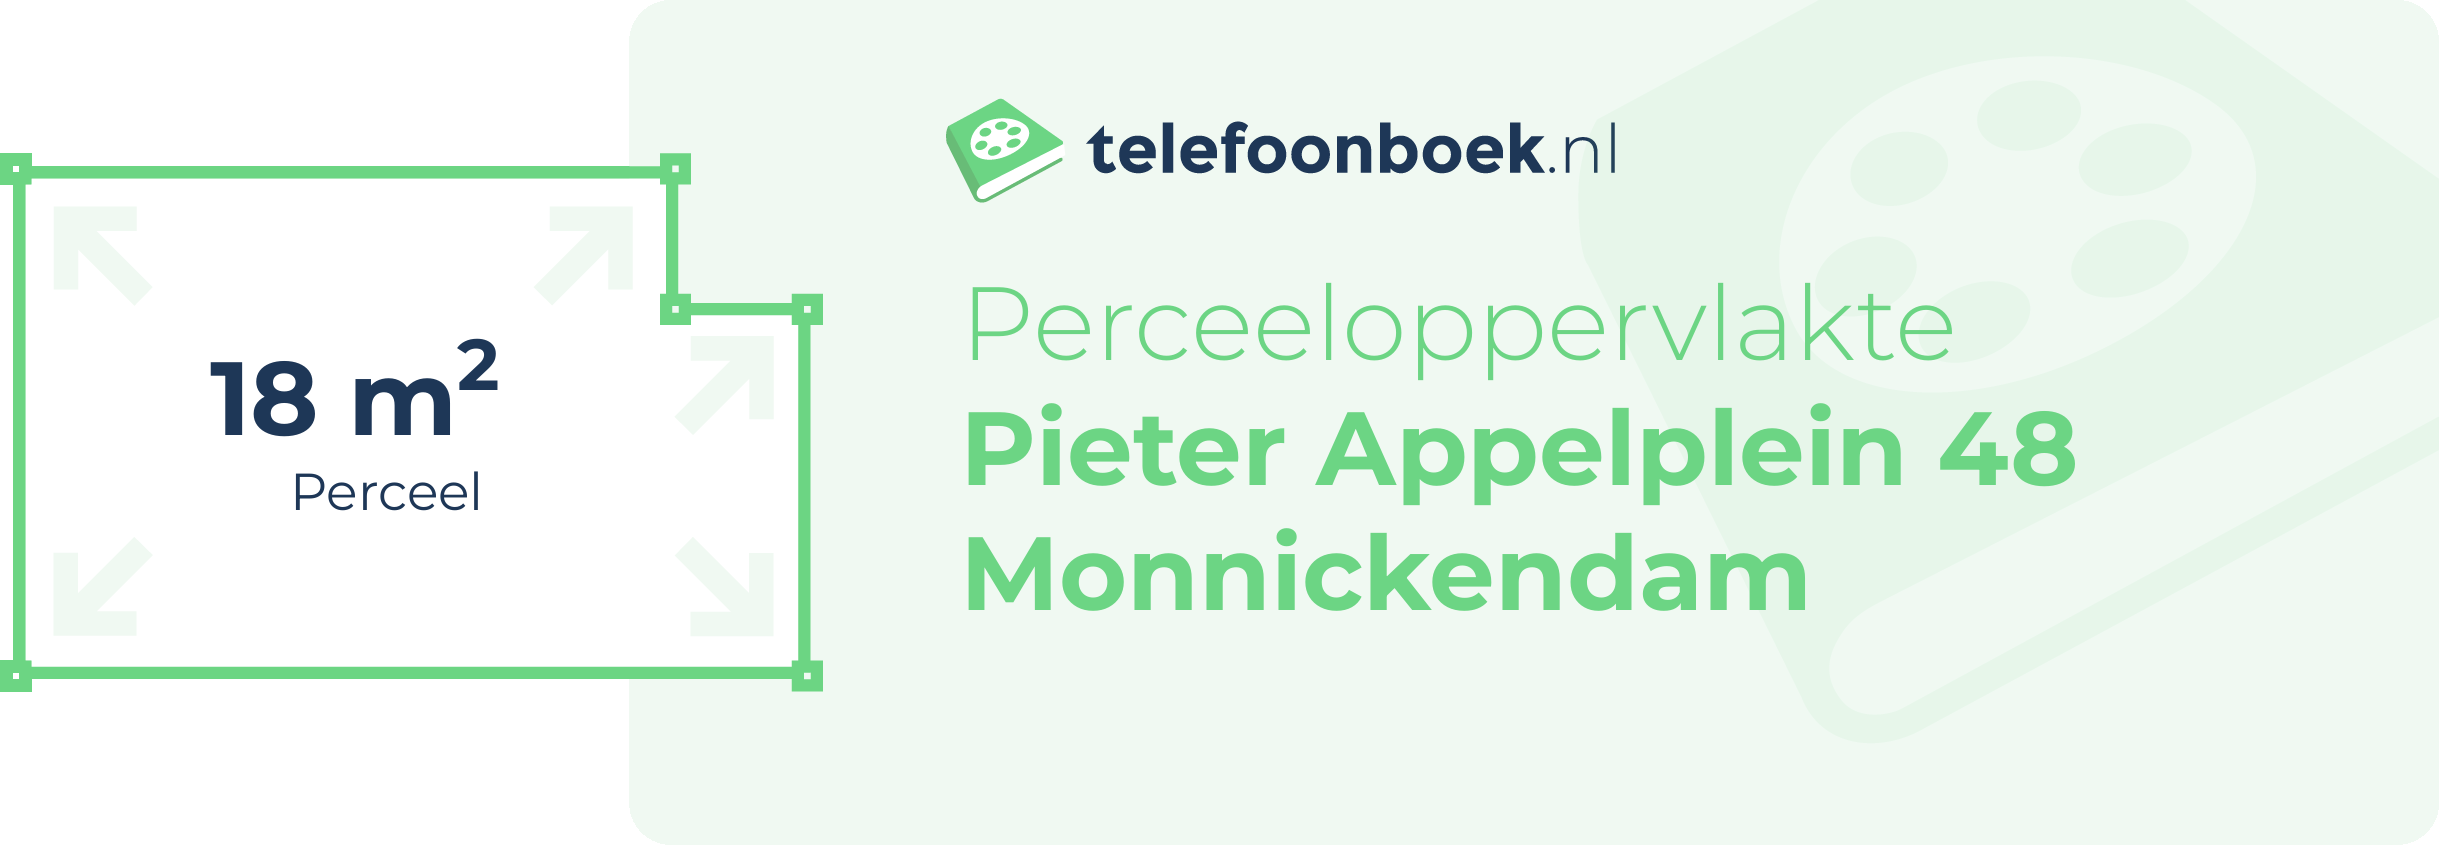 Perceeloppervlakte Pieter Appelplein 48 Monnickendam